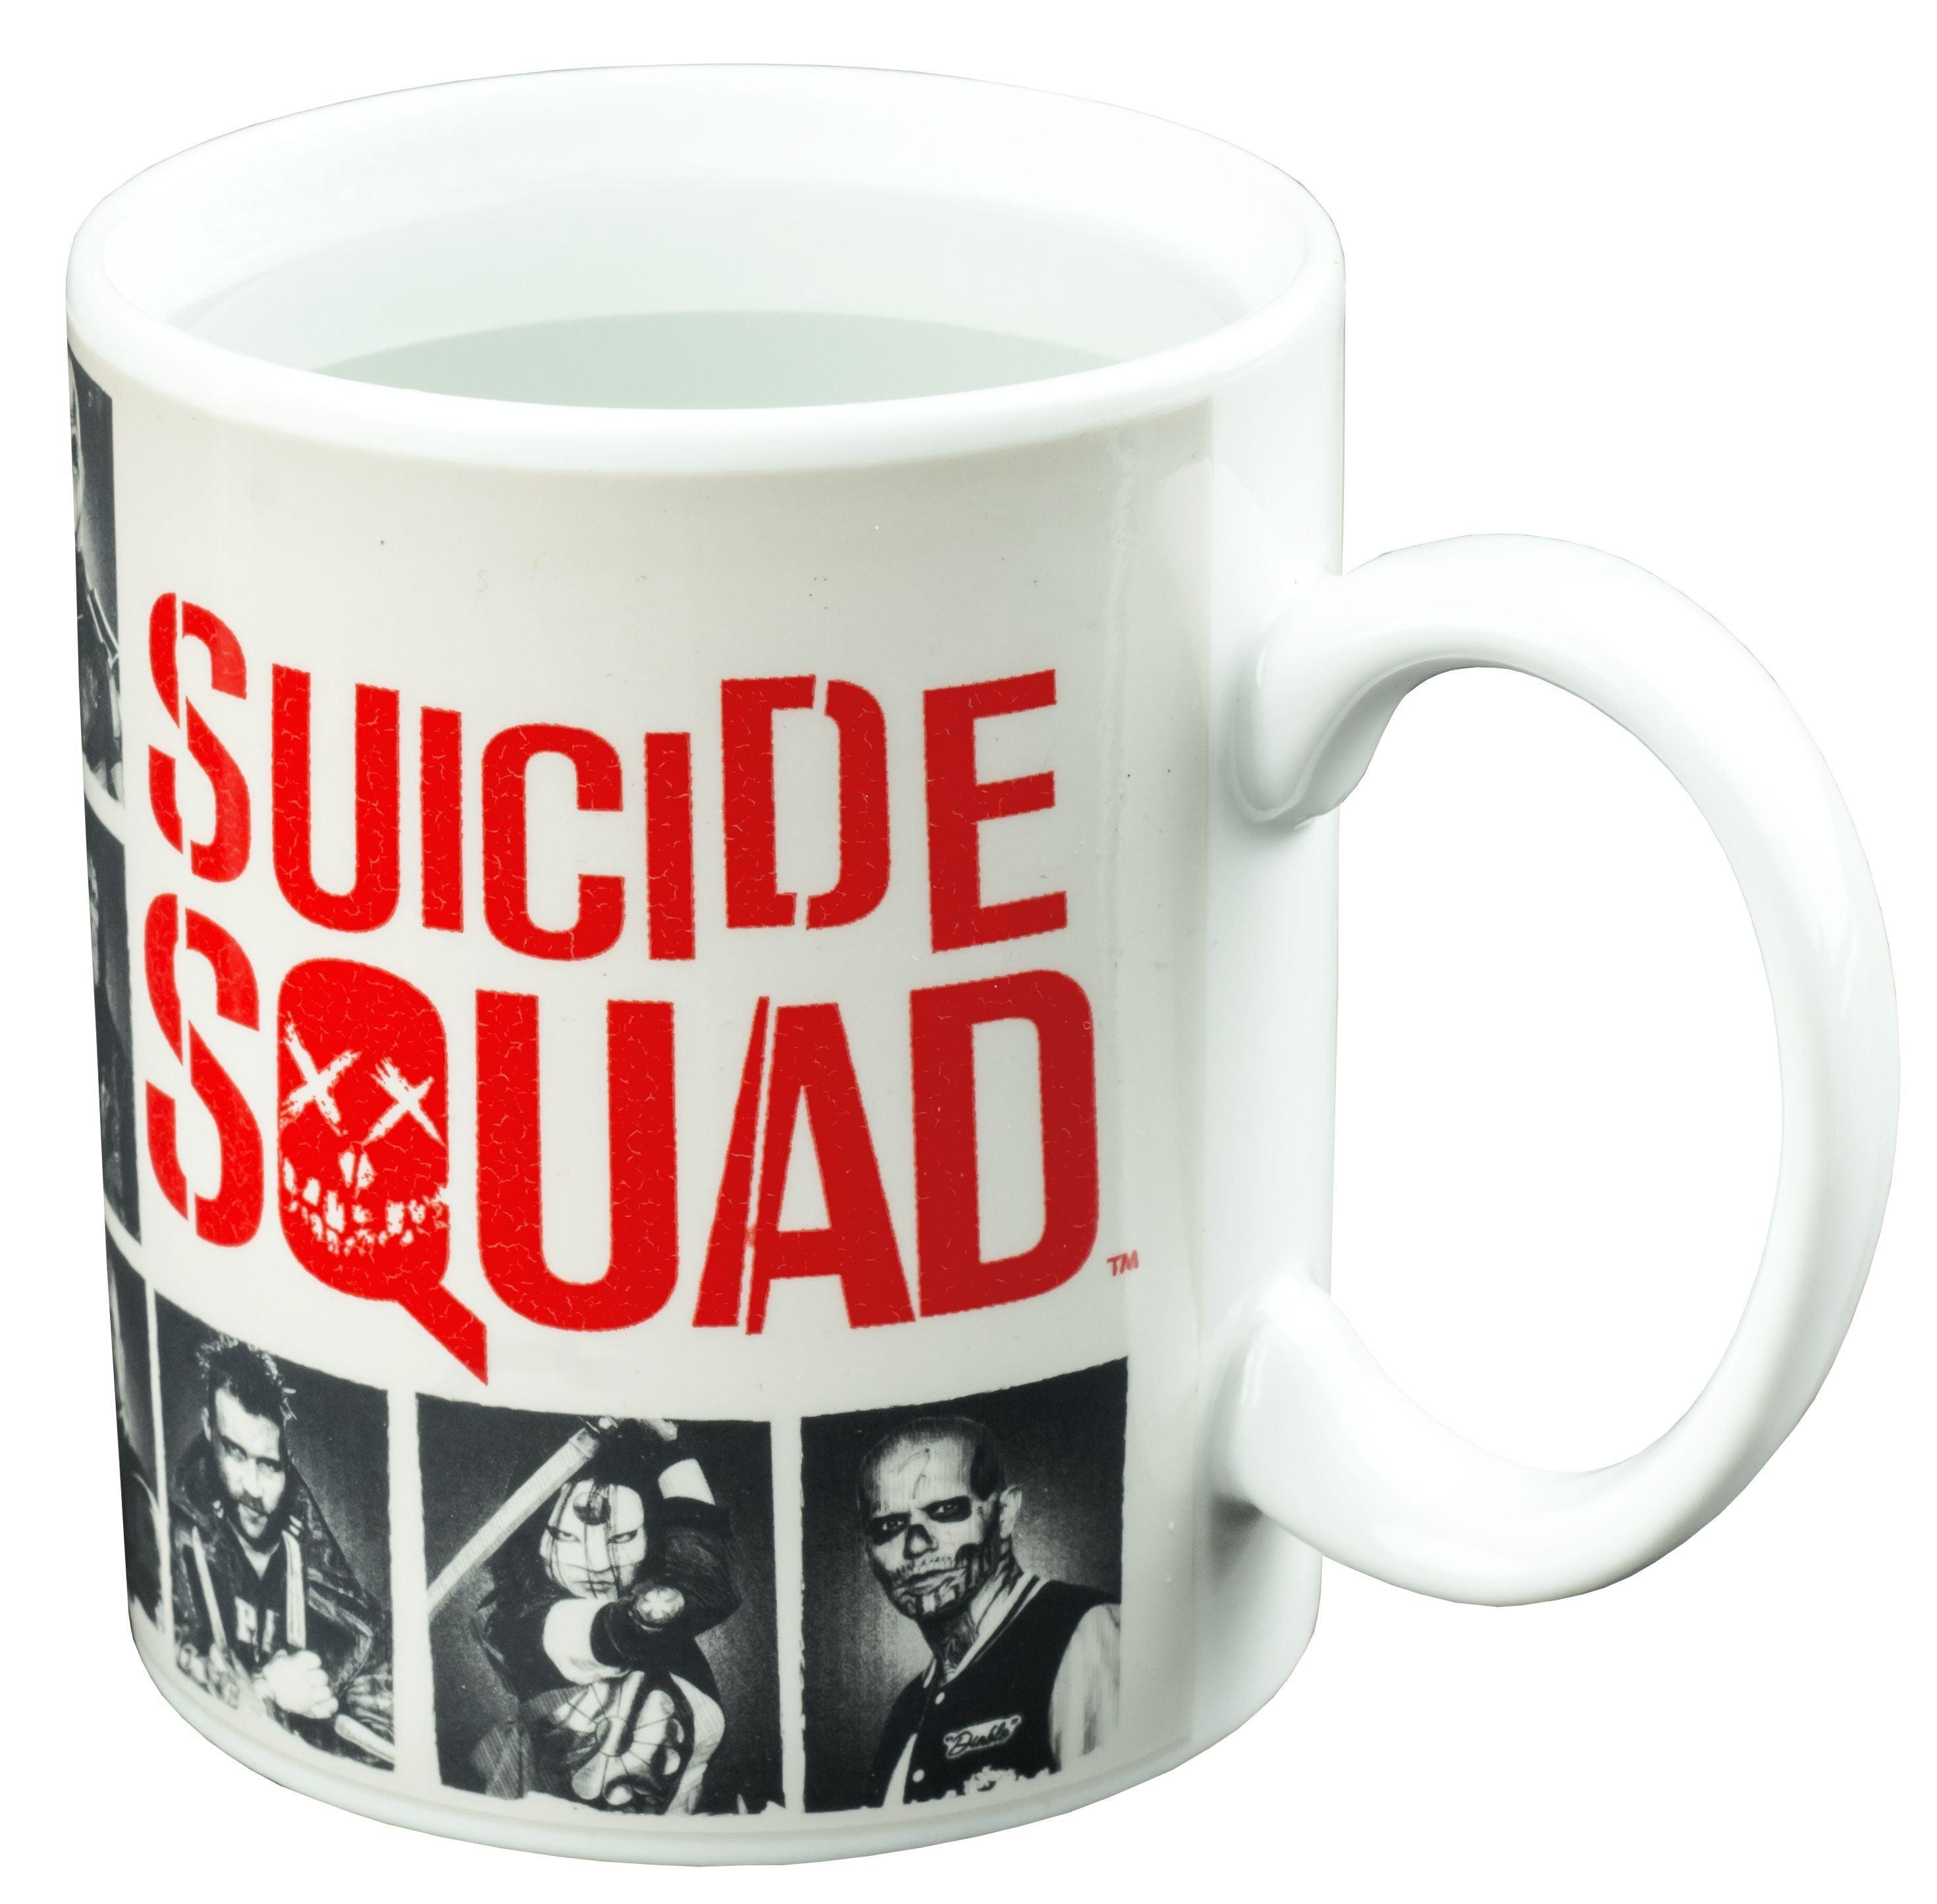 IKO0878 Suicide Squad - SKWAD Heat Changing Mug - Ikon Collectables - Titan Pop Culture